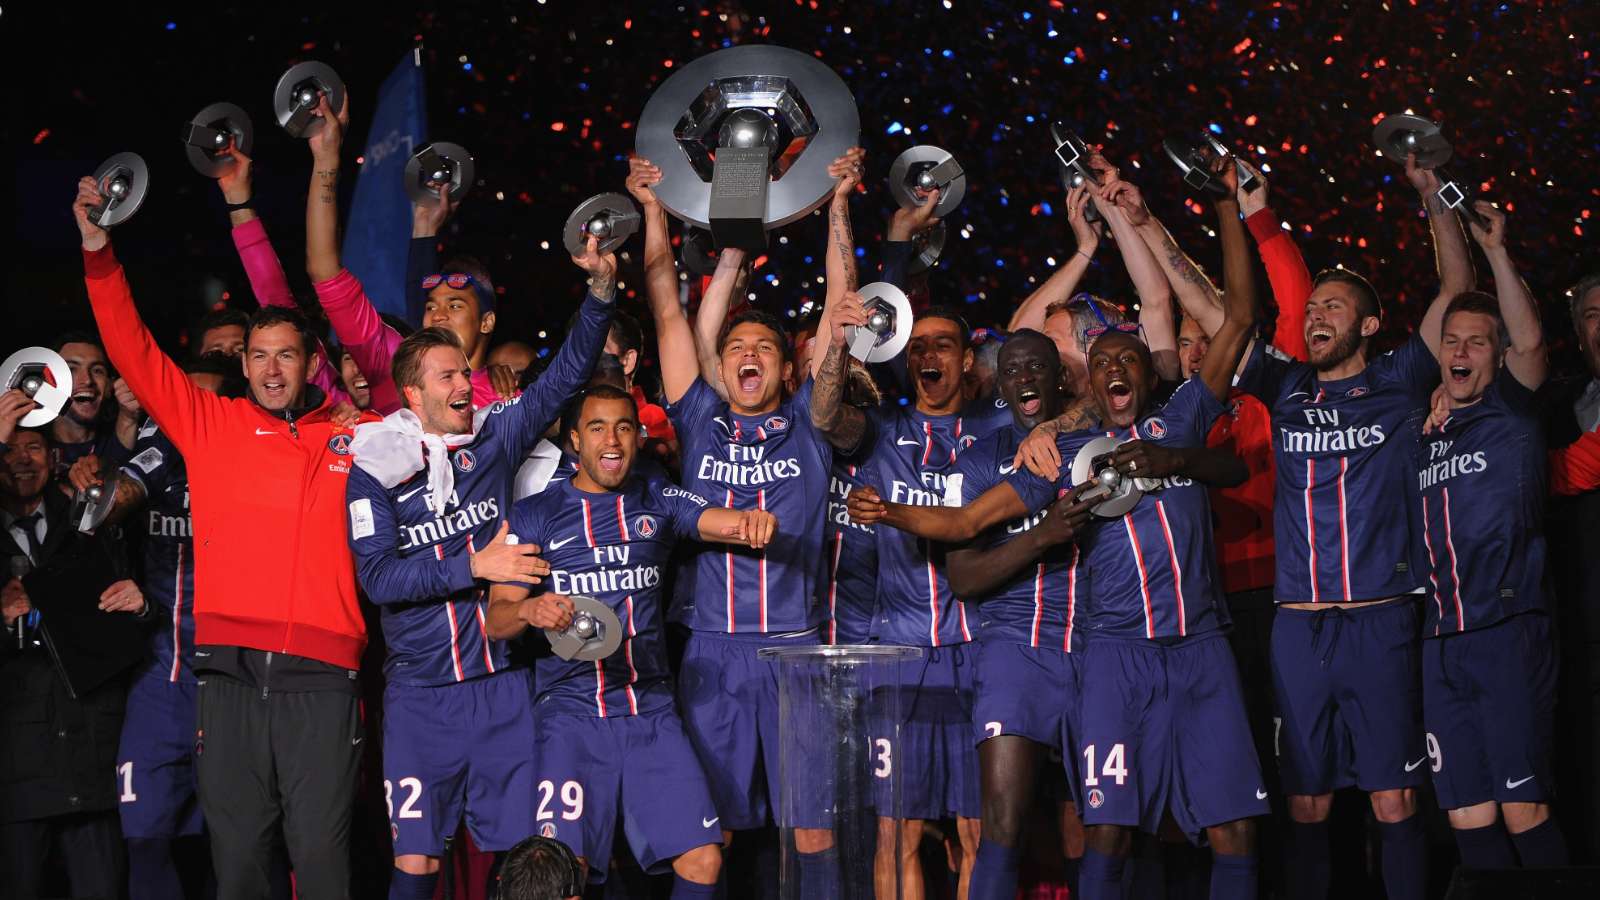 PSG - Ligue 1 Champions 2013